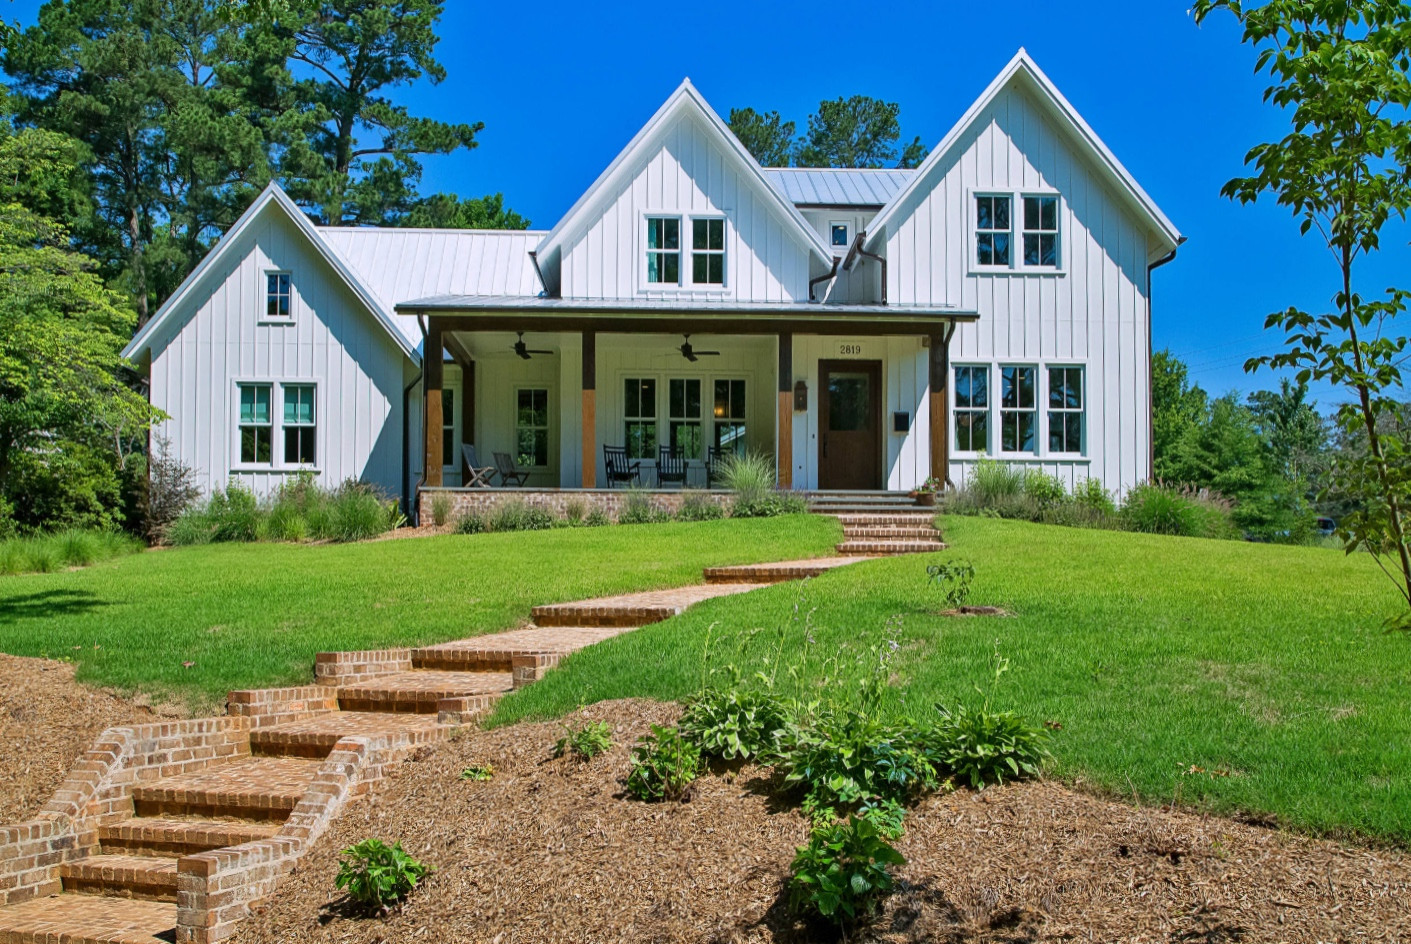 Raleigh - Farmhouse - New Construction Home